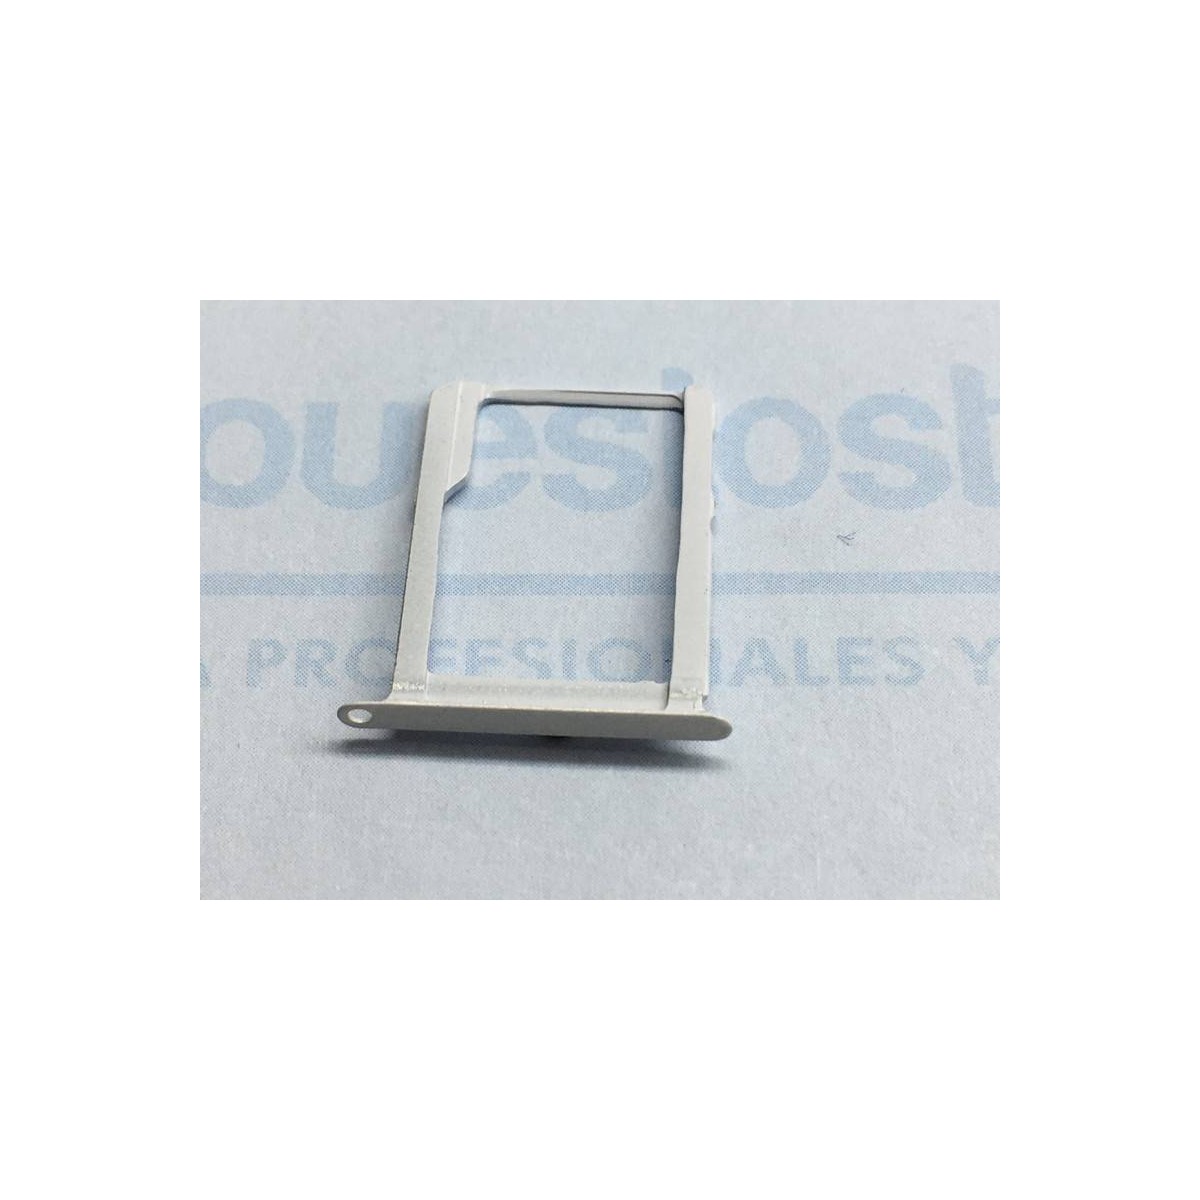 ✓ Bandeja de tarjeta micro SD blanca para Samsung Galaxy A3 A300F, Samsung Galaxy A5, A500F, Galaxy A700F